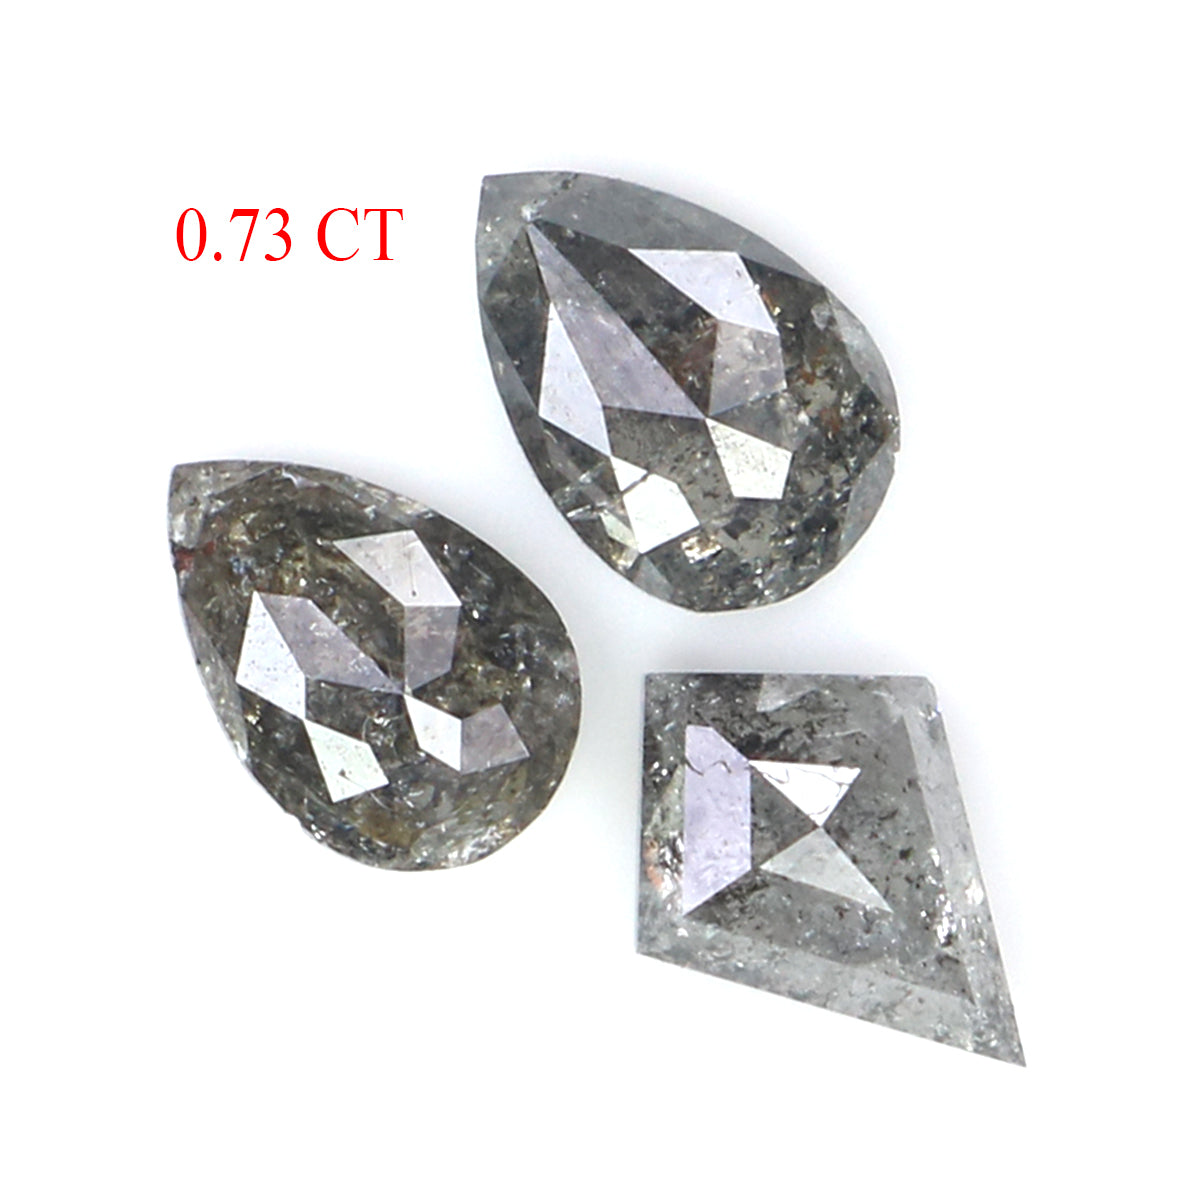 Natural Loose Mix Shape Diamond, Salt And Pepper Mix Shape Diamond, Natural Loose Diamond, Rose Cut Diamond, 0.73 CT Mix Shape Shape L2738